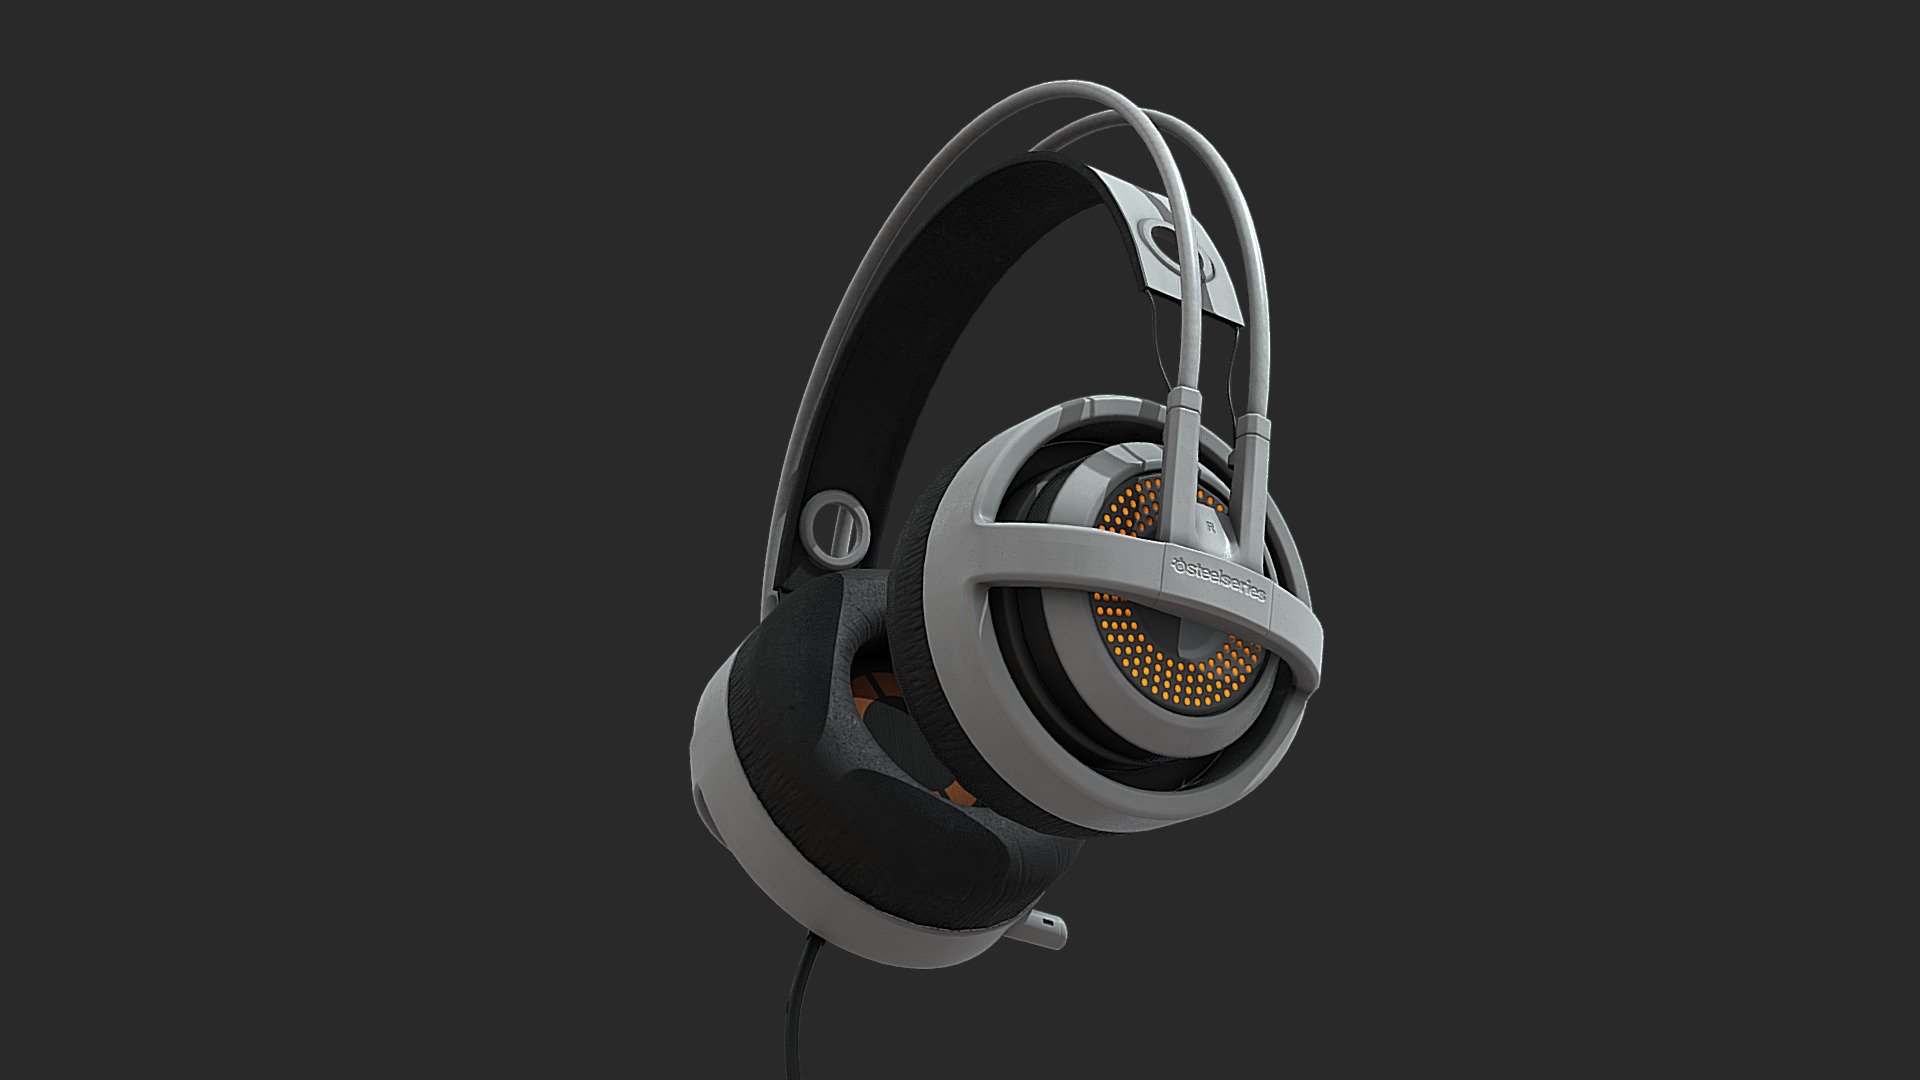 ArtStation Steelseries Siberia V3 Headphones